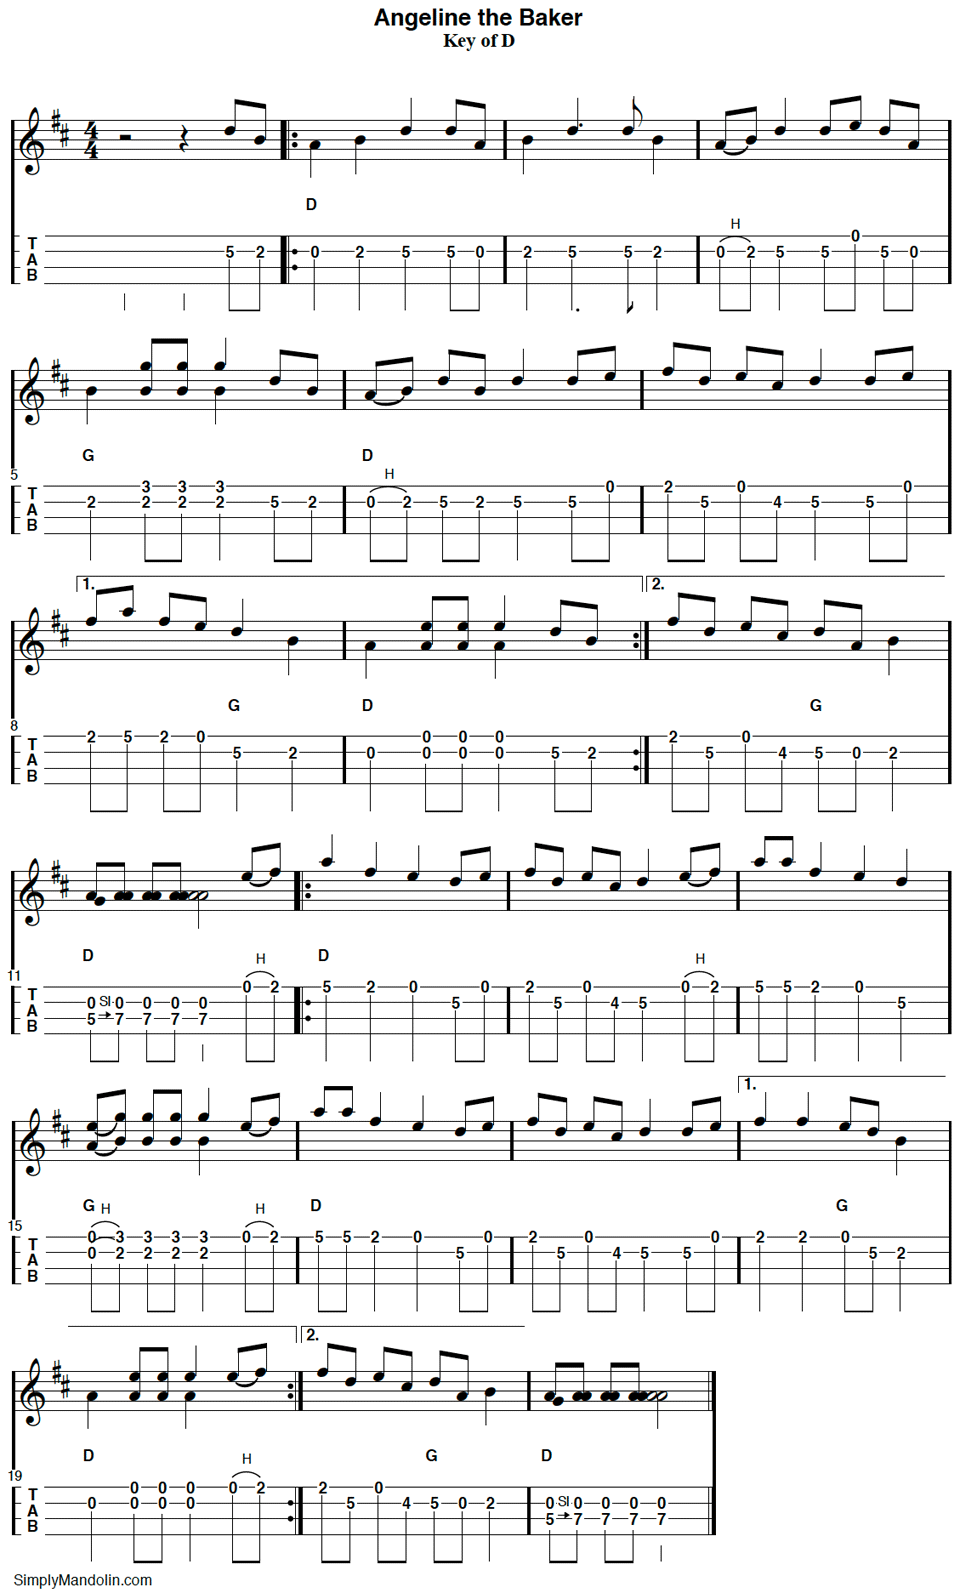 Mandolin tablature for Angeline the Baker